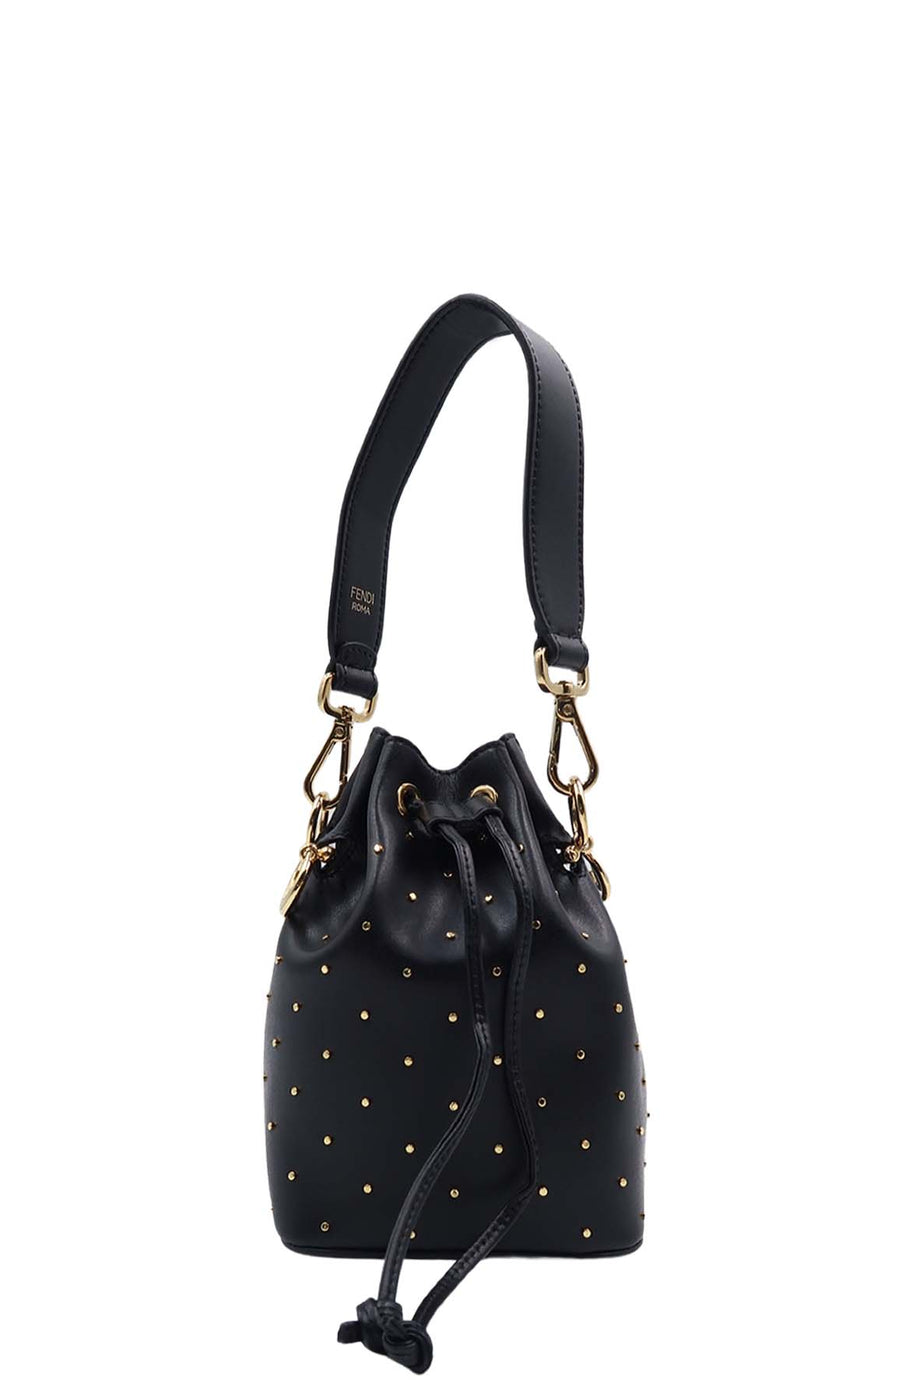 Fendi - Mon Tresor Black Leather Studded Mini Bucket Bag